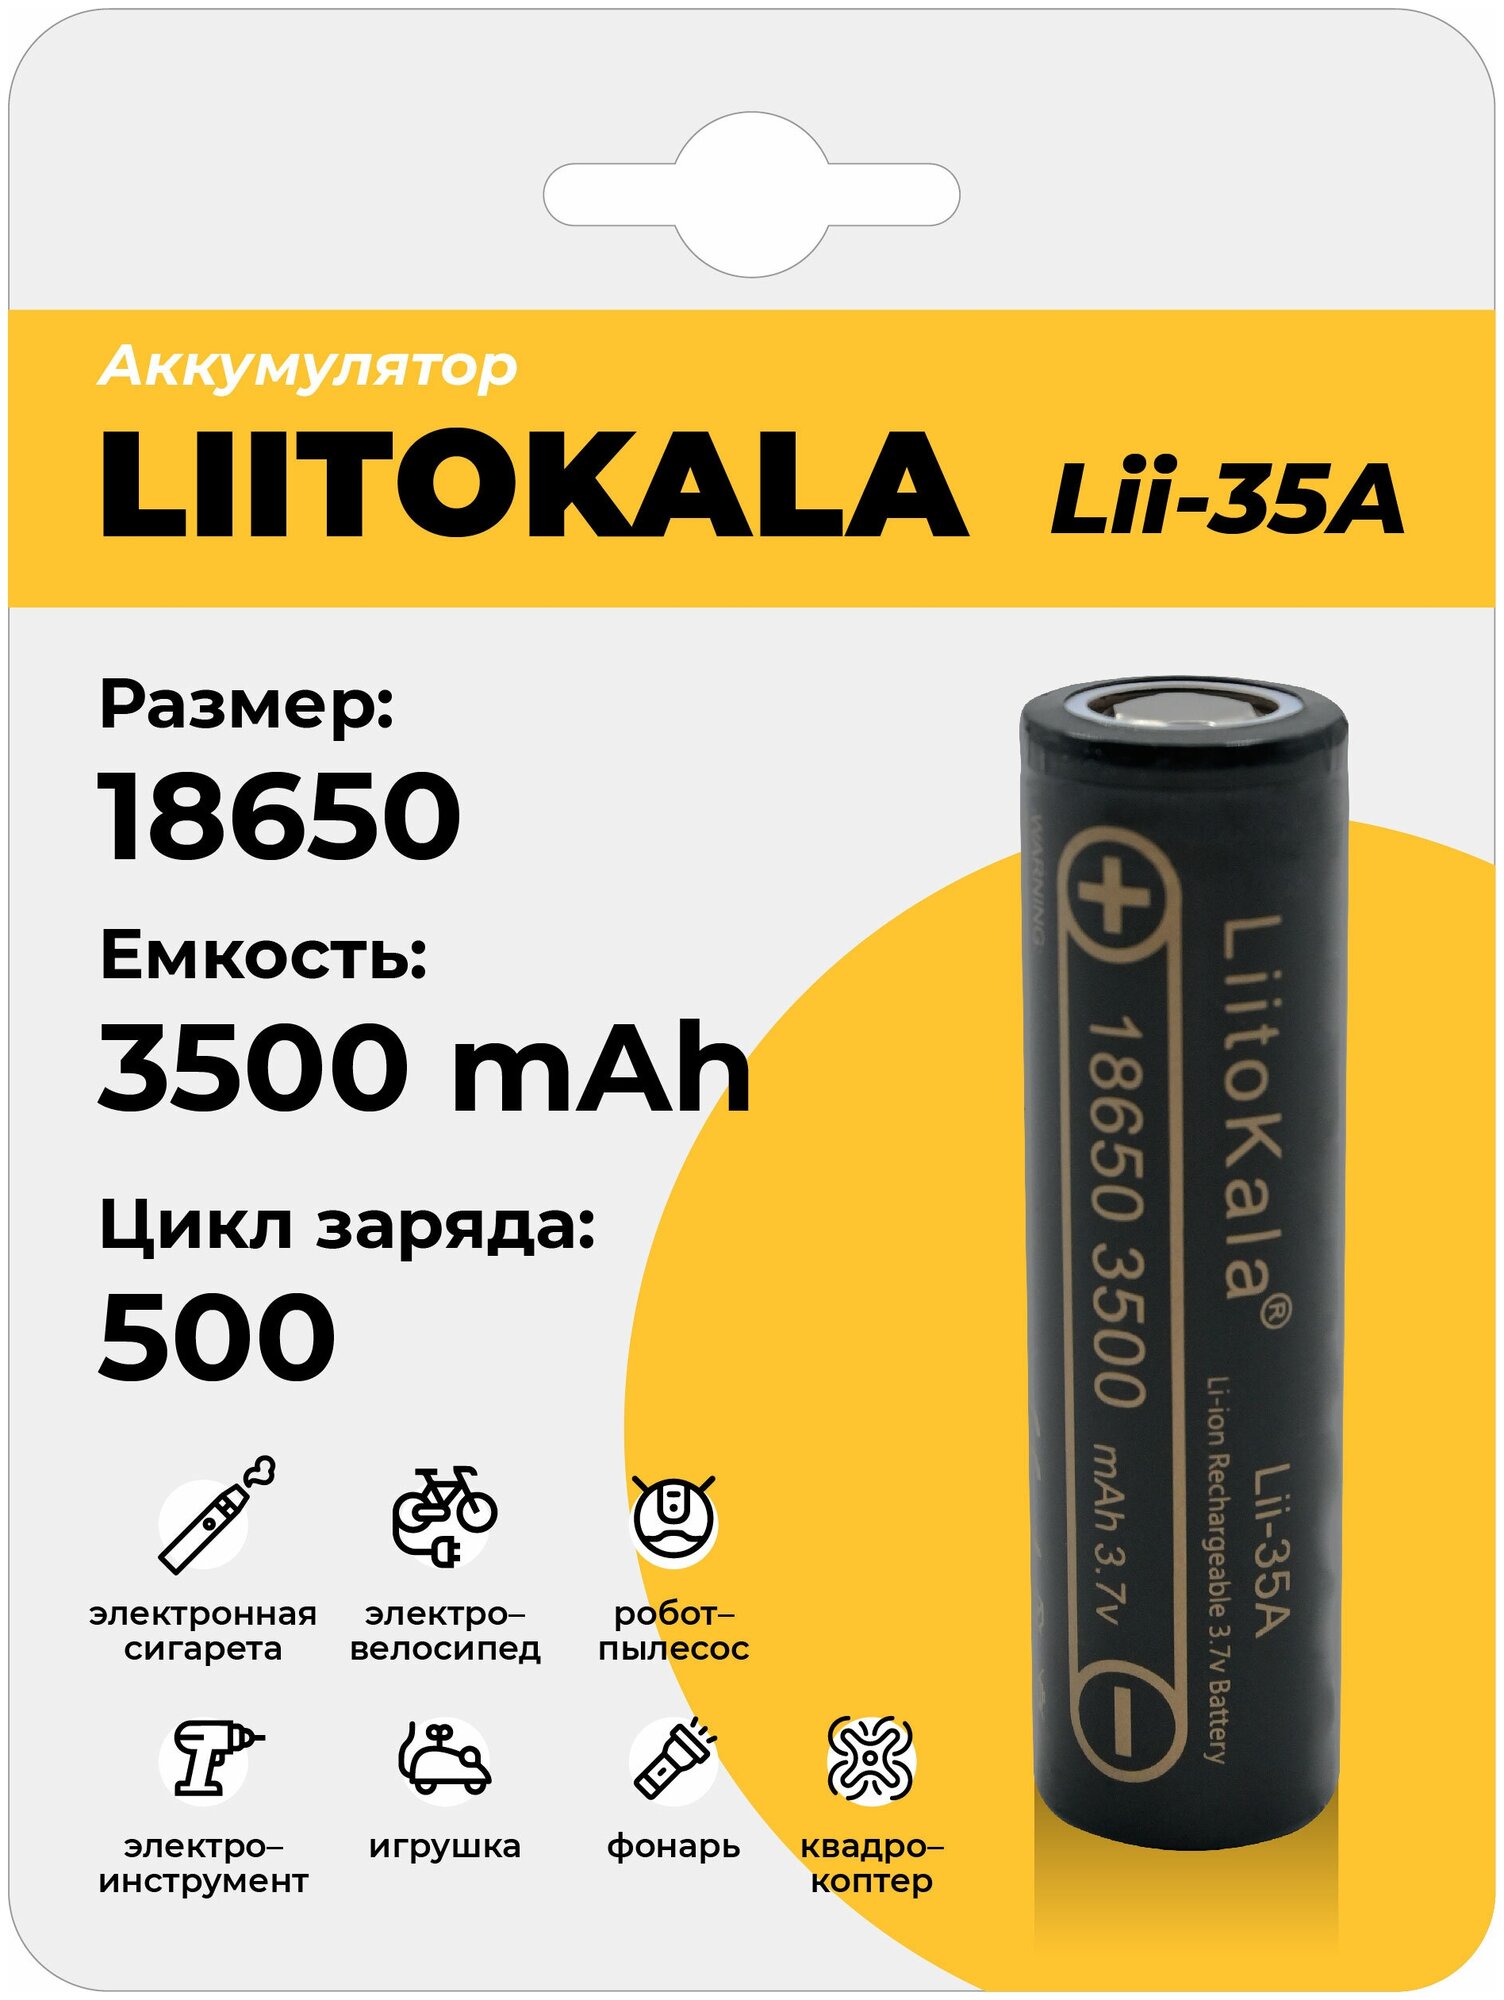 Аккумулятор LiitoKala Lii-35A 18650 3500mAh, универсальная Li-Ion батарейка, литий-ионный аккумулятор